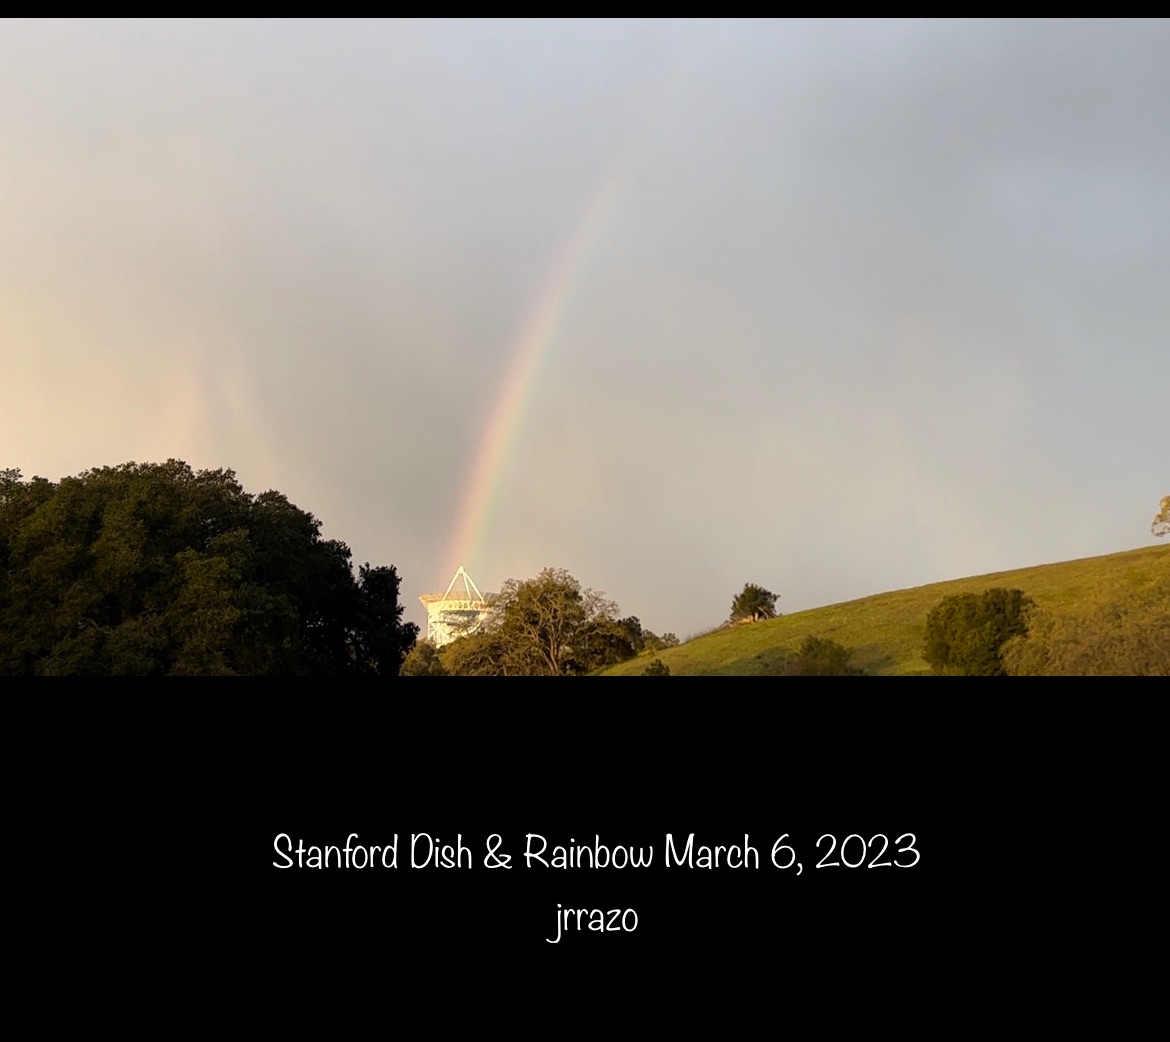 Community photo entitled  by Jonathan Razo on 03/06/2023 at Stanford